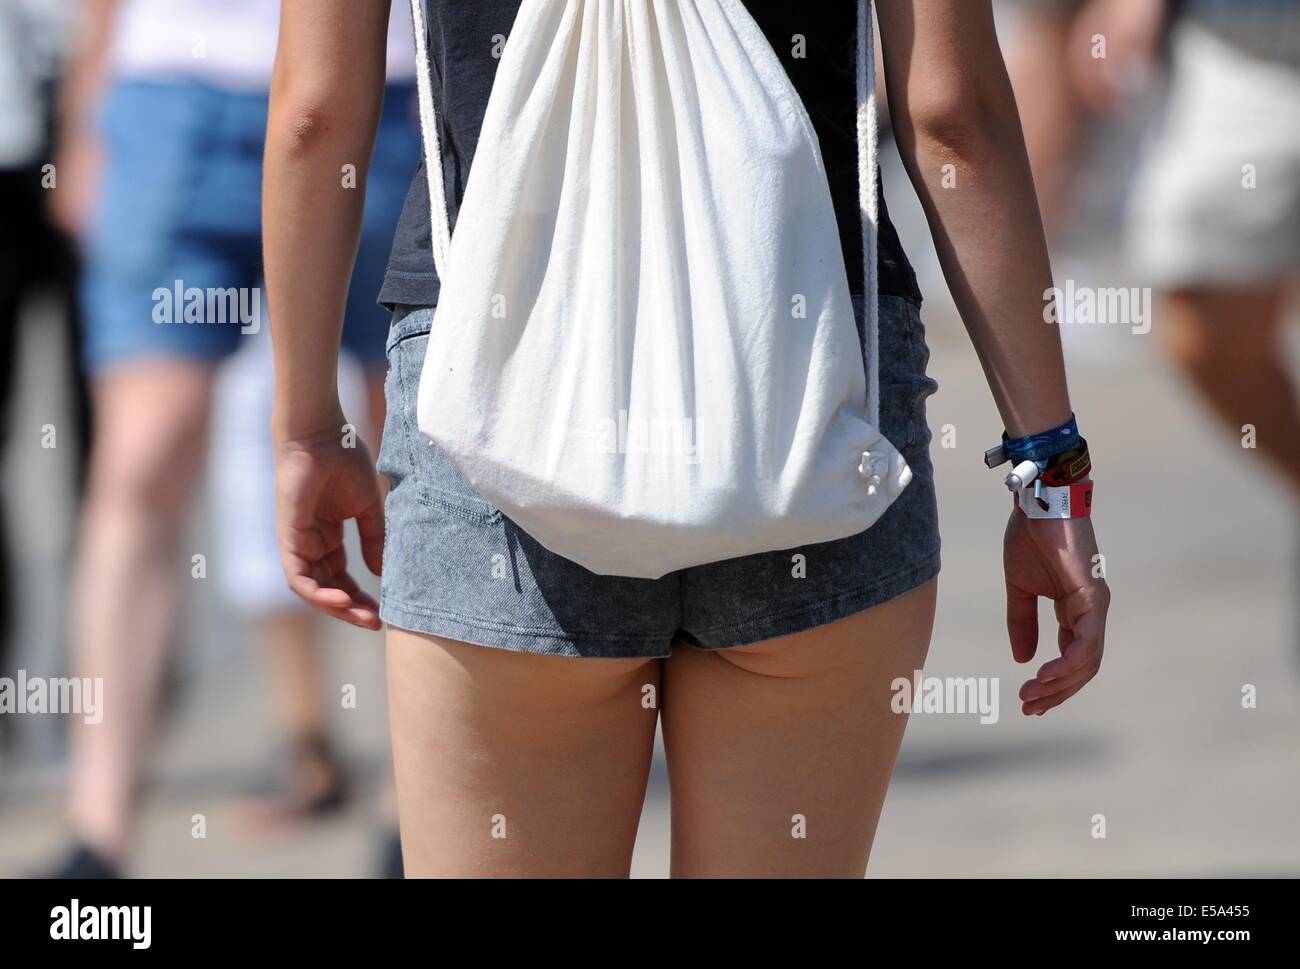 Berlin, Germany. 22nd July, 2014. A young woman wears ultra short shorts in  Berlin, Germany, 22 July 2014. Photo: Britta Pedersen/dpa/Alamy Live News  Stock Photo - Alamy